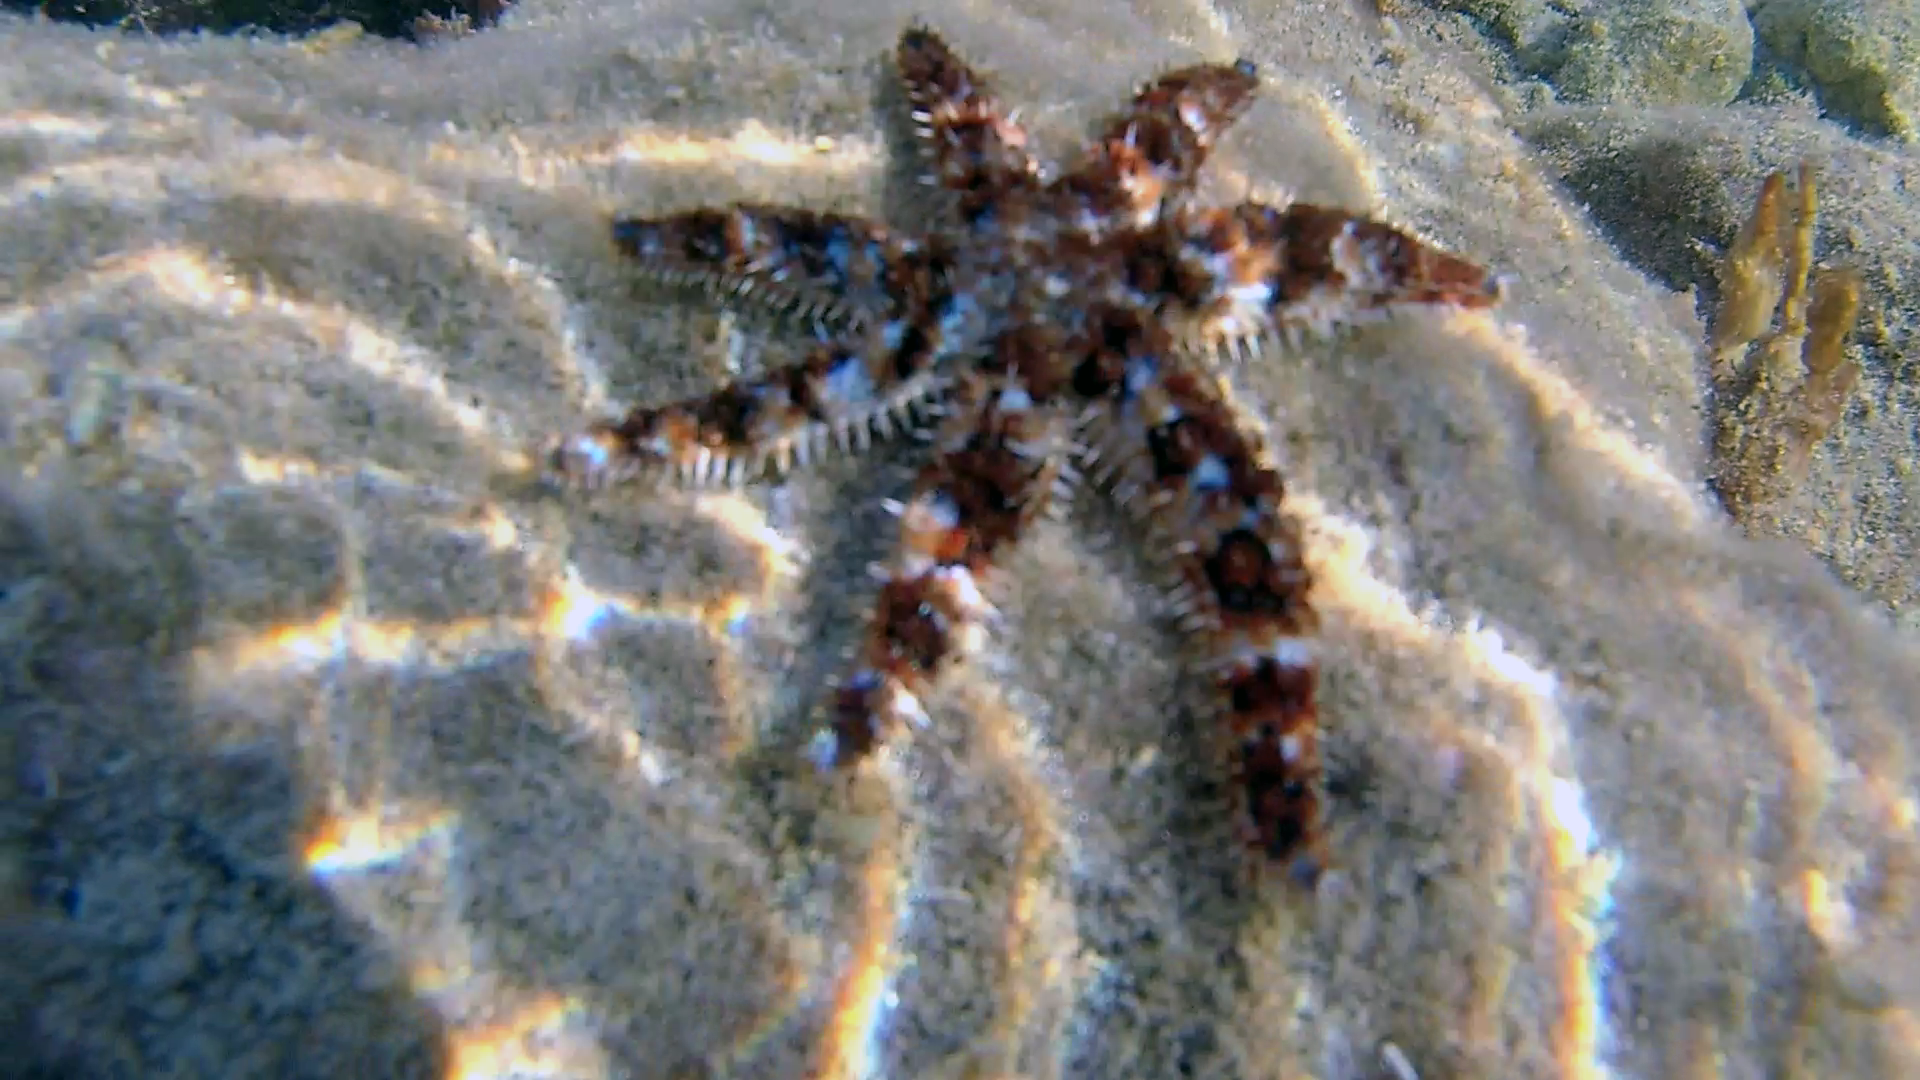 Stella marina variabile - the blue spiny starfish - Coscinasterias tenuispina - intotheblue.it